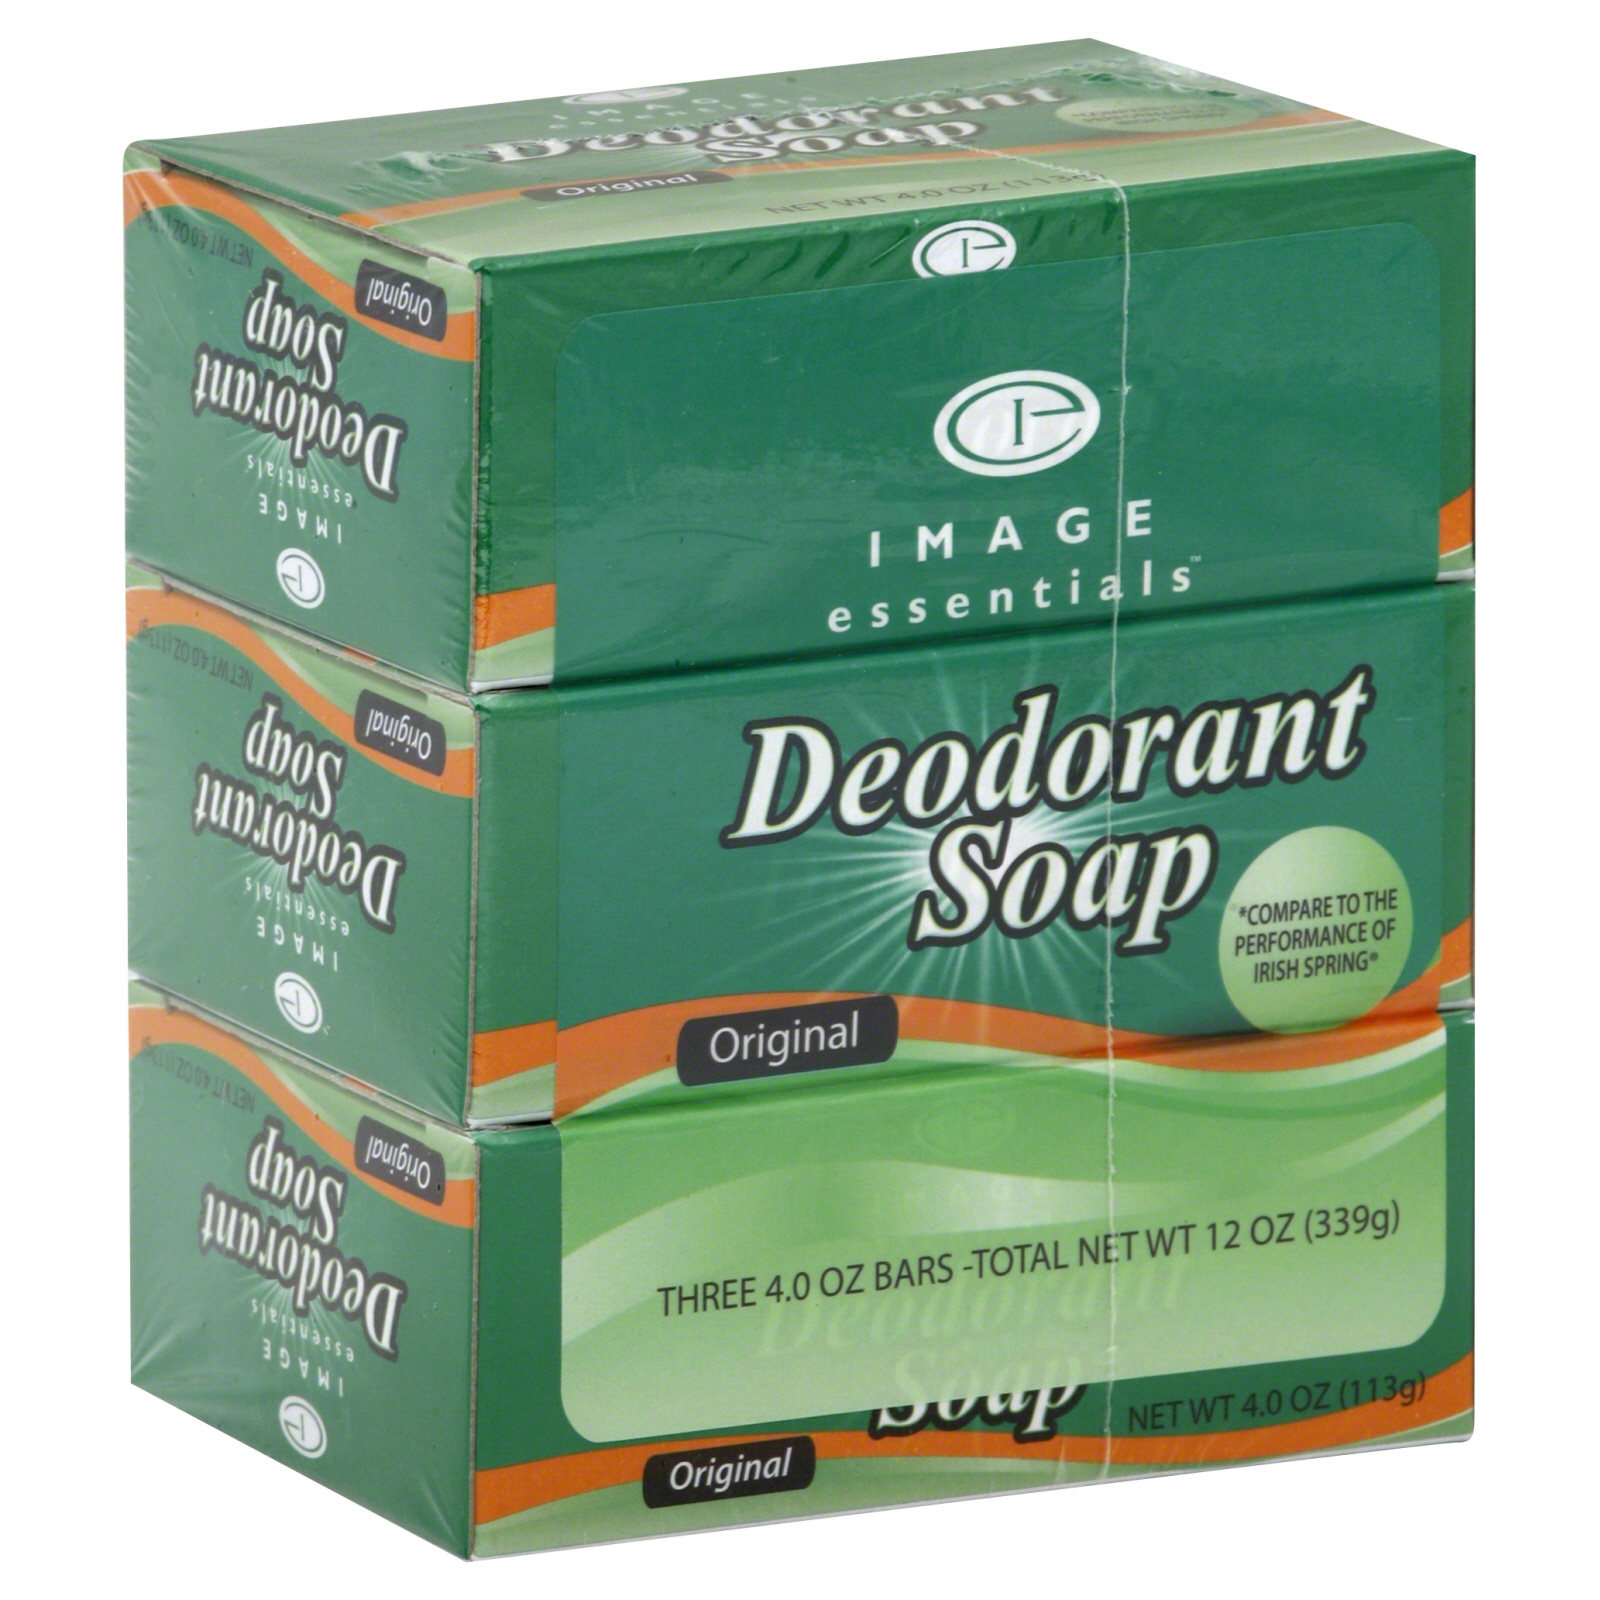 Image Essentials Soap, Deodorant, Original, 3 - 4 oz bars [12 oz (339 g)]